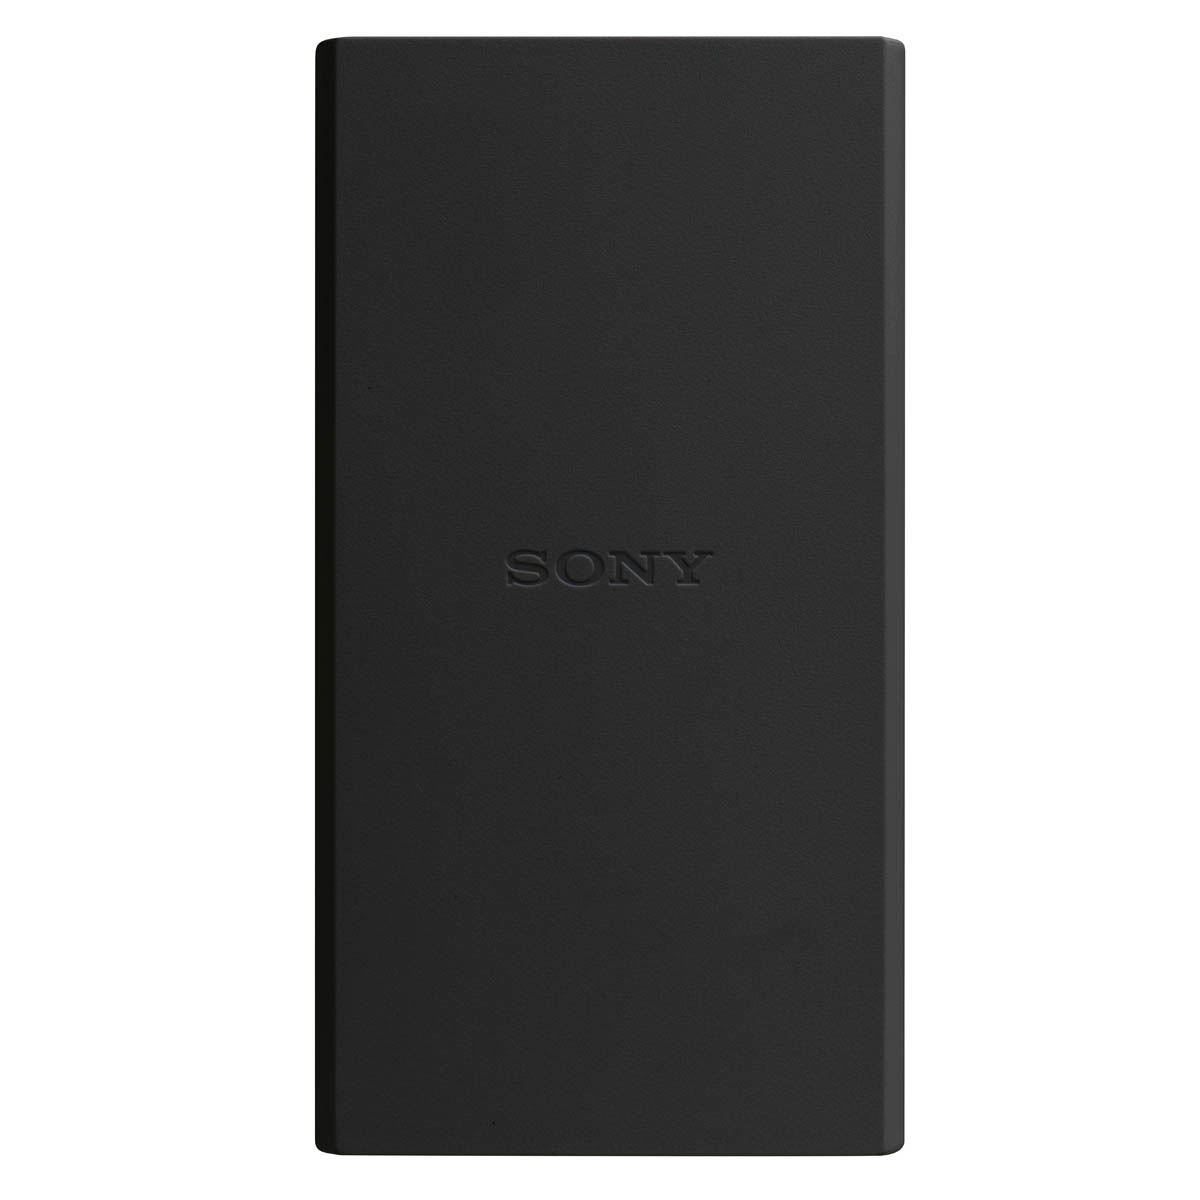 Sony Cargador Portátil de Polímeros  de Iones de Litio 10,000mAh Negro Carga Segura